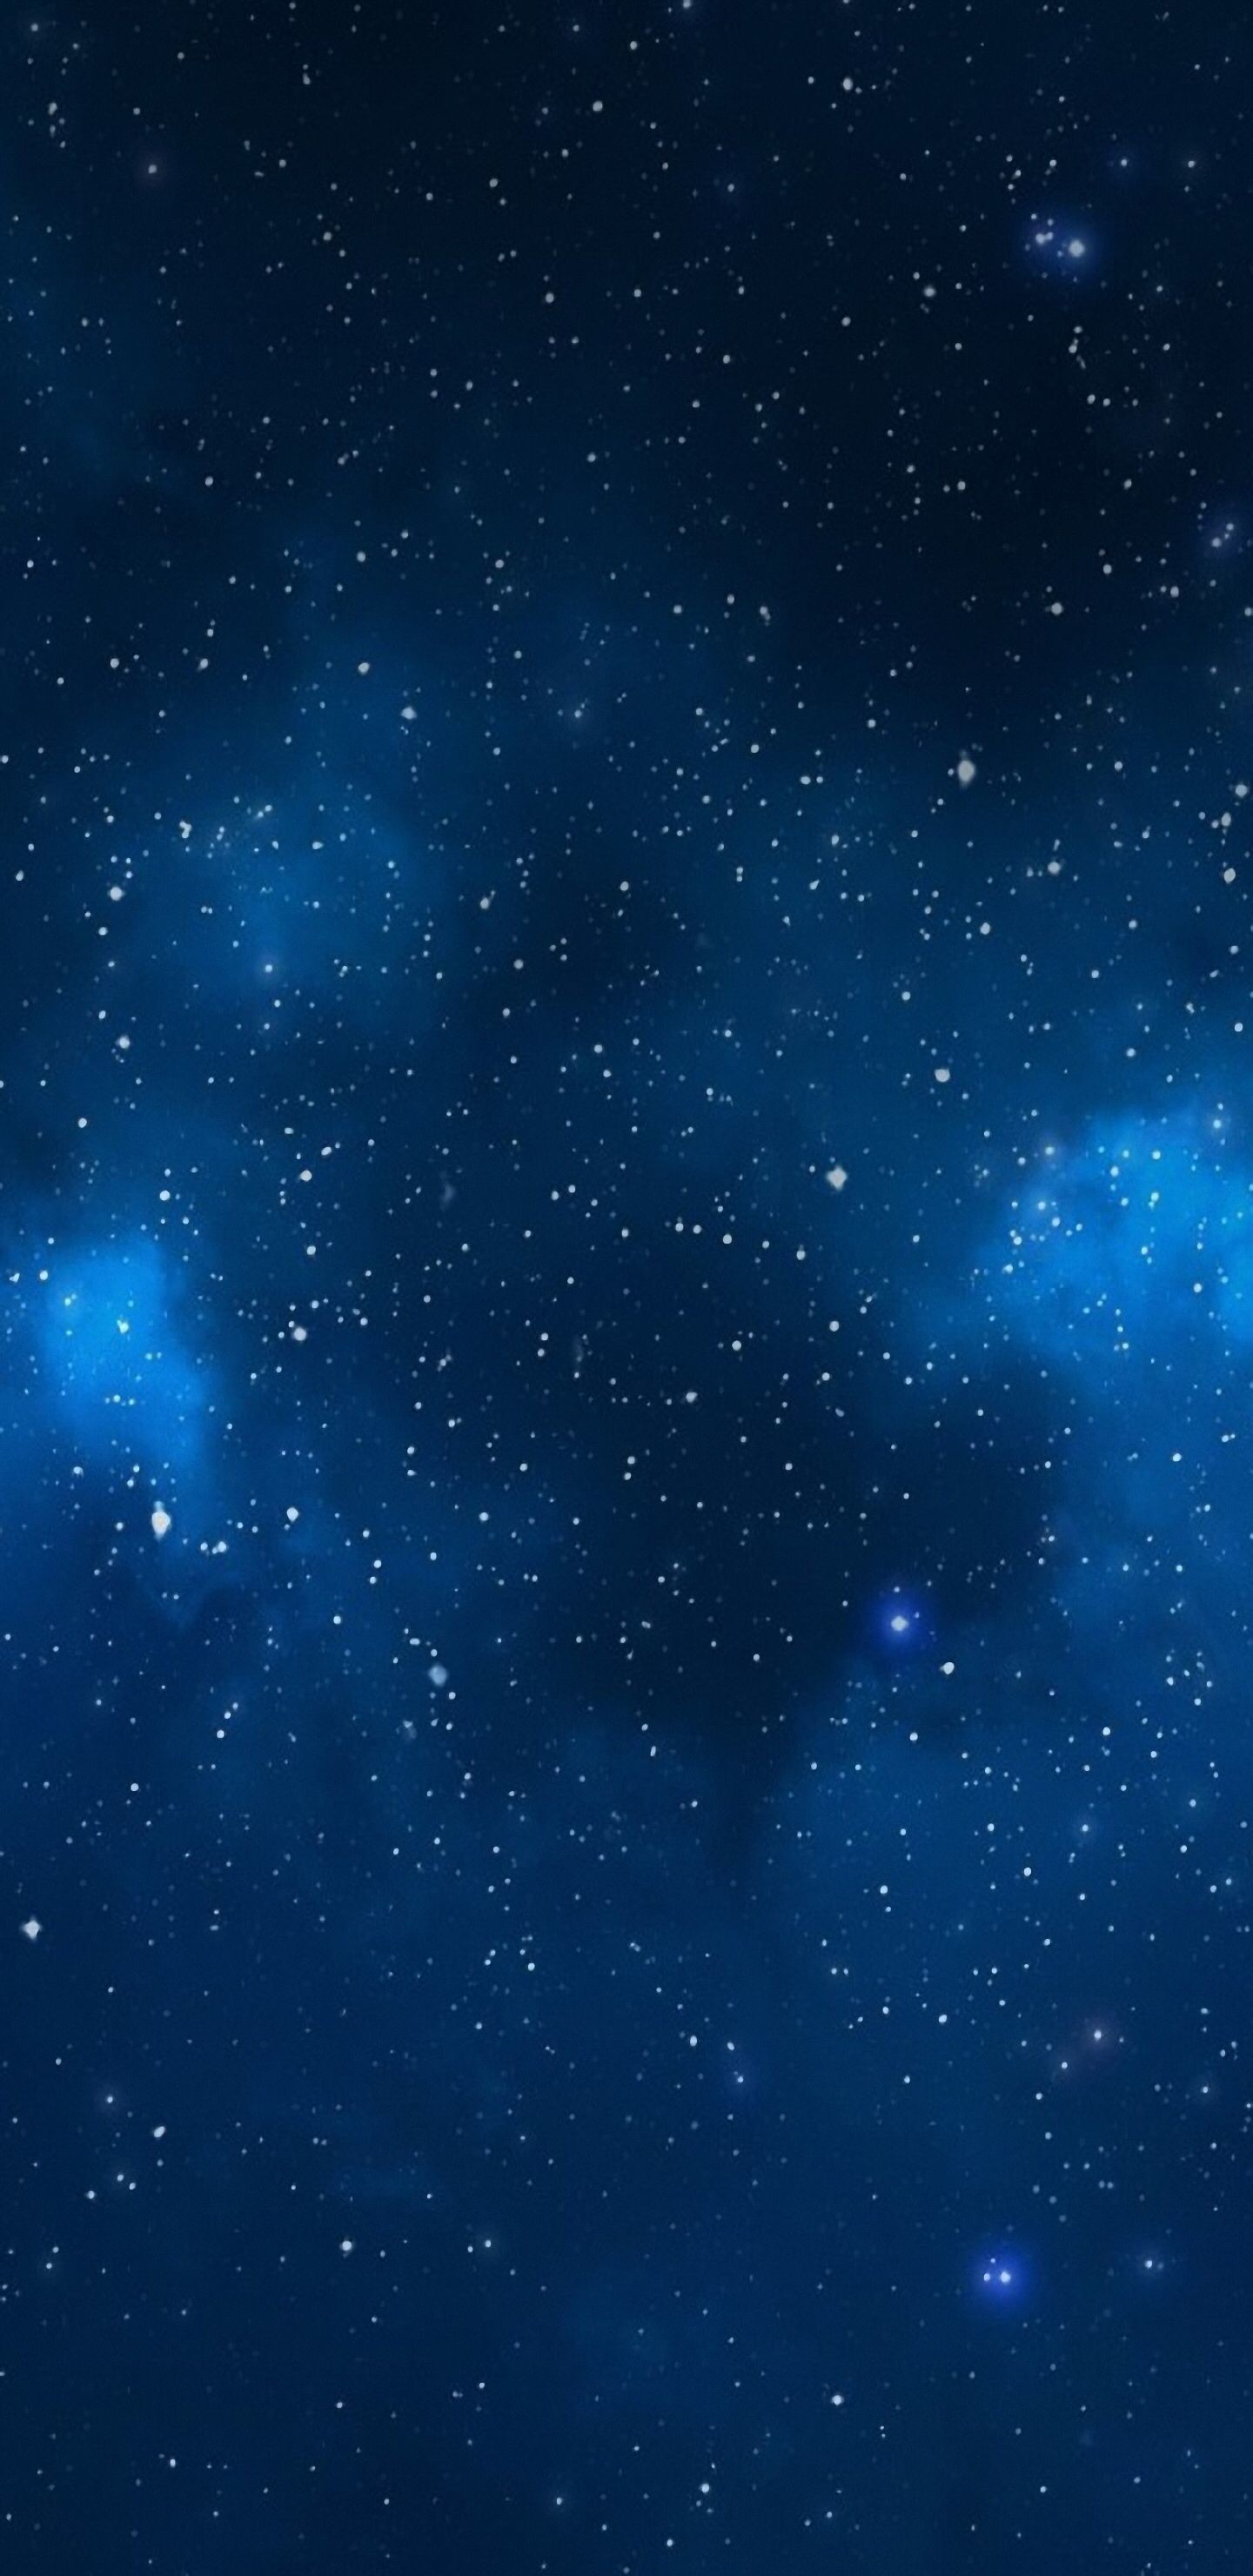 1440x2960 Dark, blue, wallpaper, galaxy, tranquil, beauty, nature, night, sky, stars,  Samsung